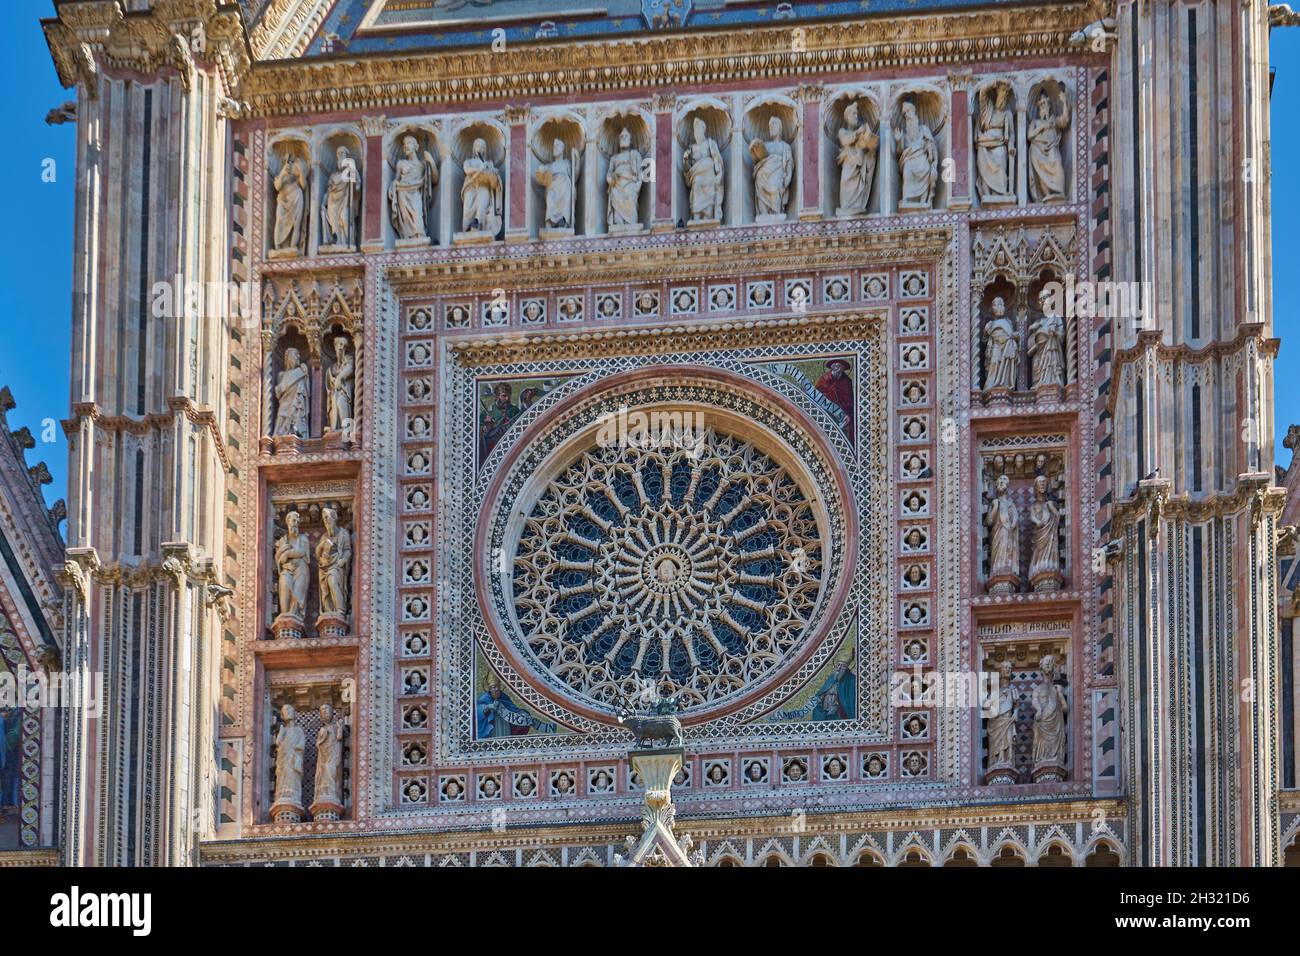 Dom von Orvieto oder Cattedrale di Santa Maria Assunta oder Kathedrale Maria Himmelfahrt, Orvieto, Provinz Terni, Umbrien, Italien, Europa Stock Photo